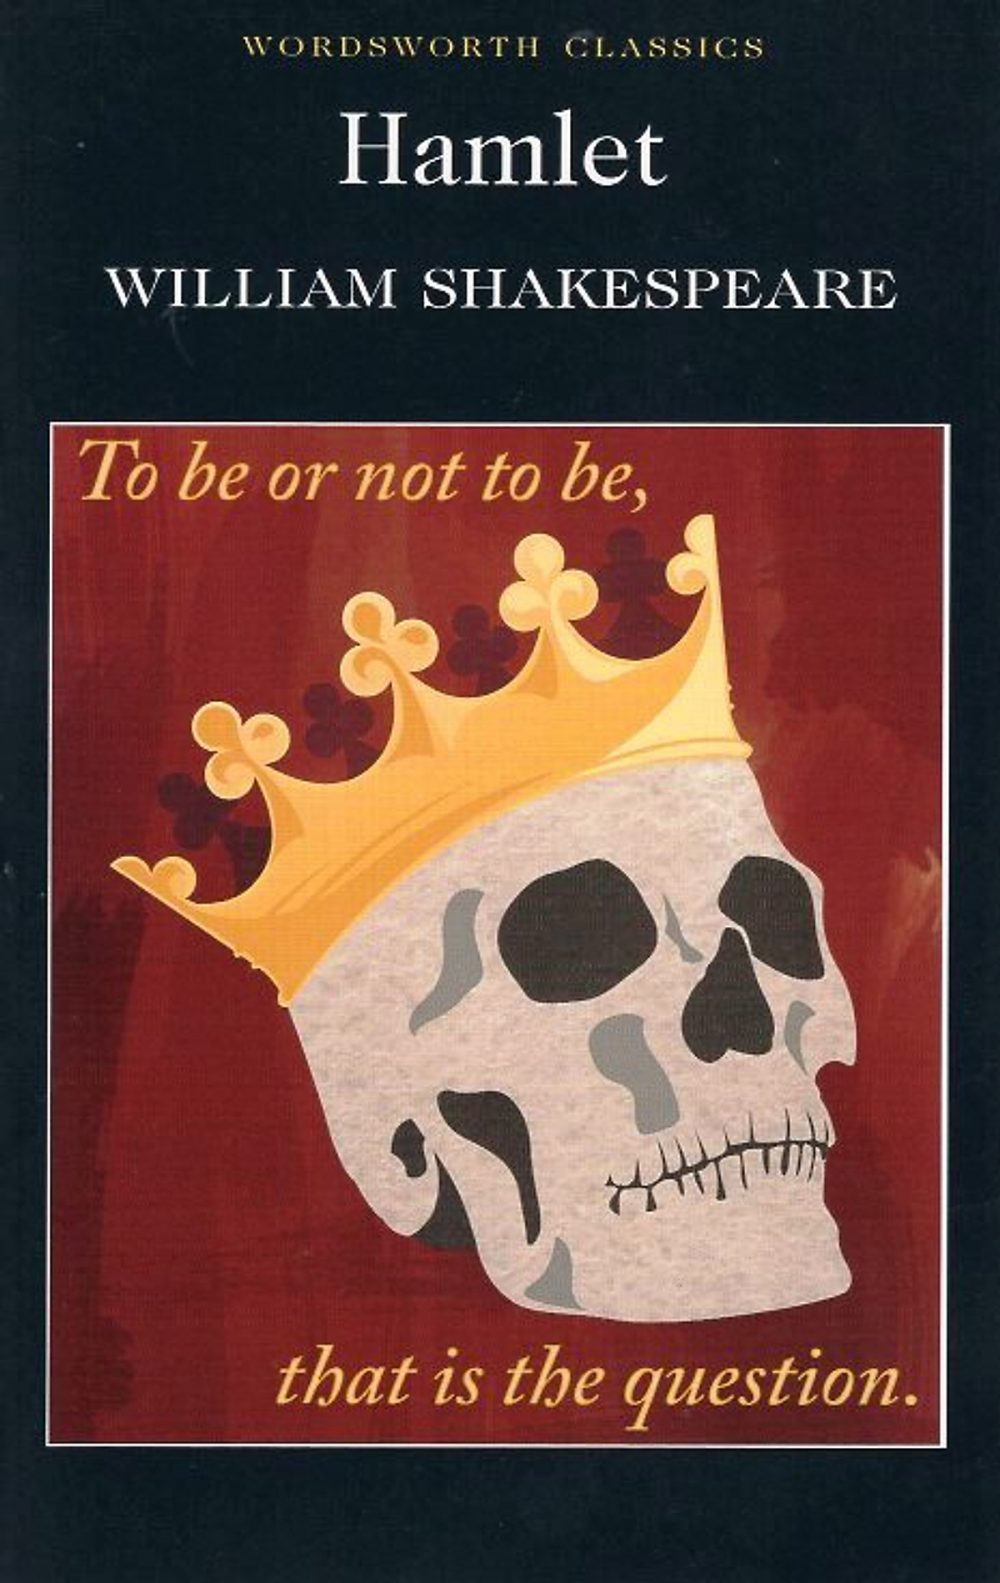 hamlet e1600147423218 - William Shakespeare: Người gửi ước mơ qua từng vở kịch